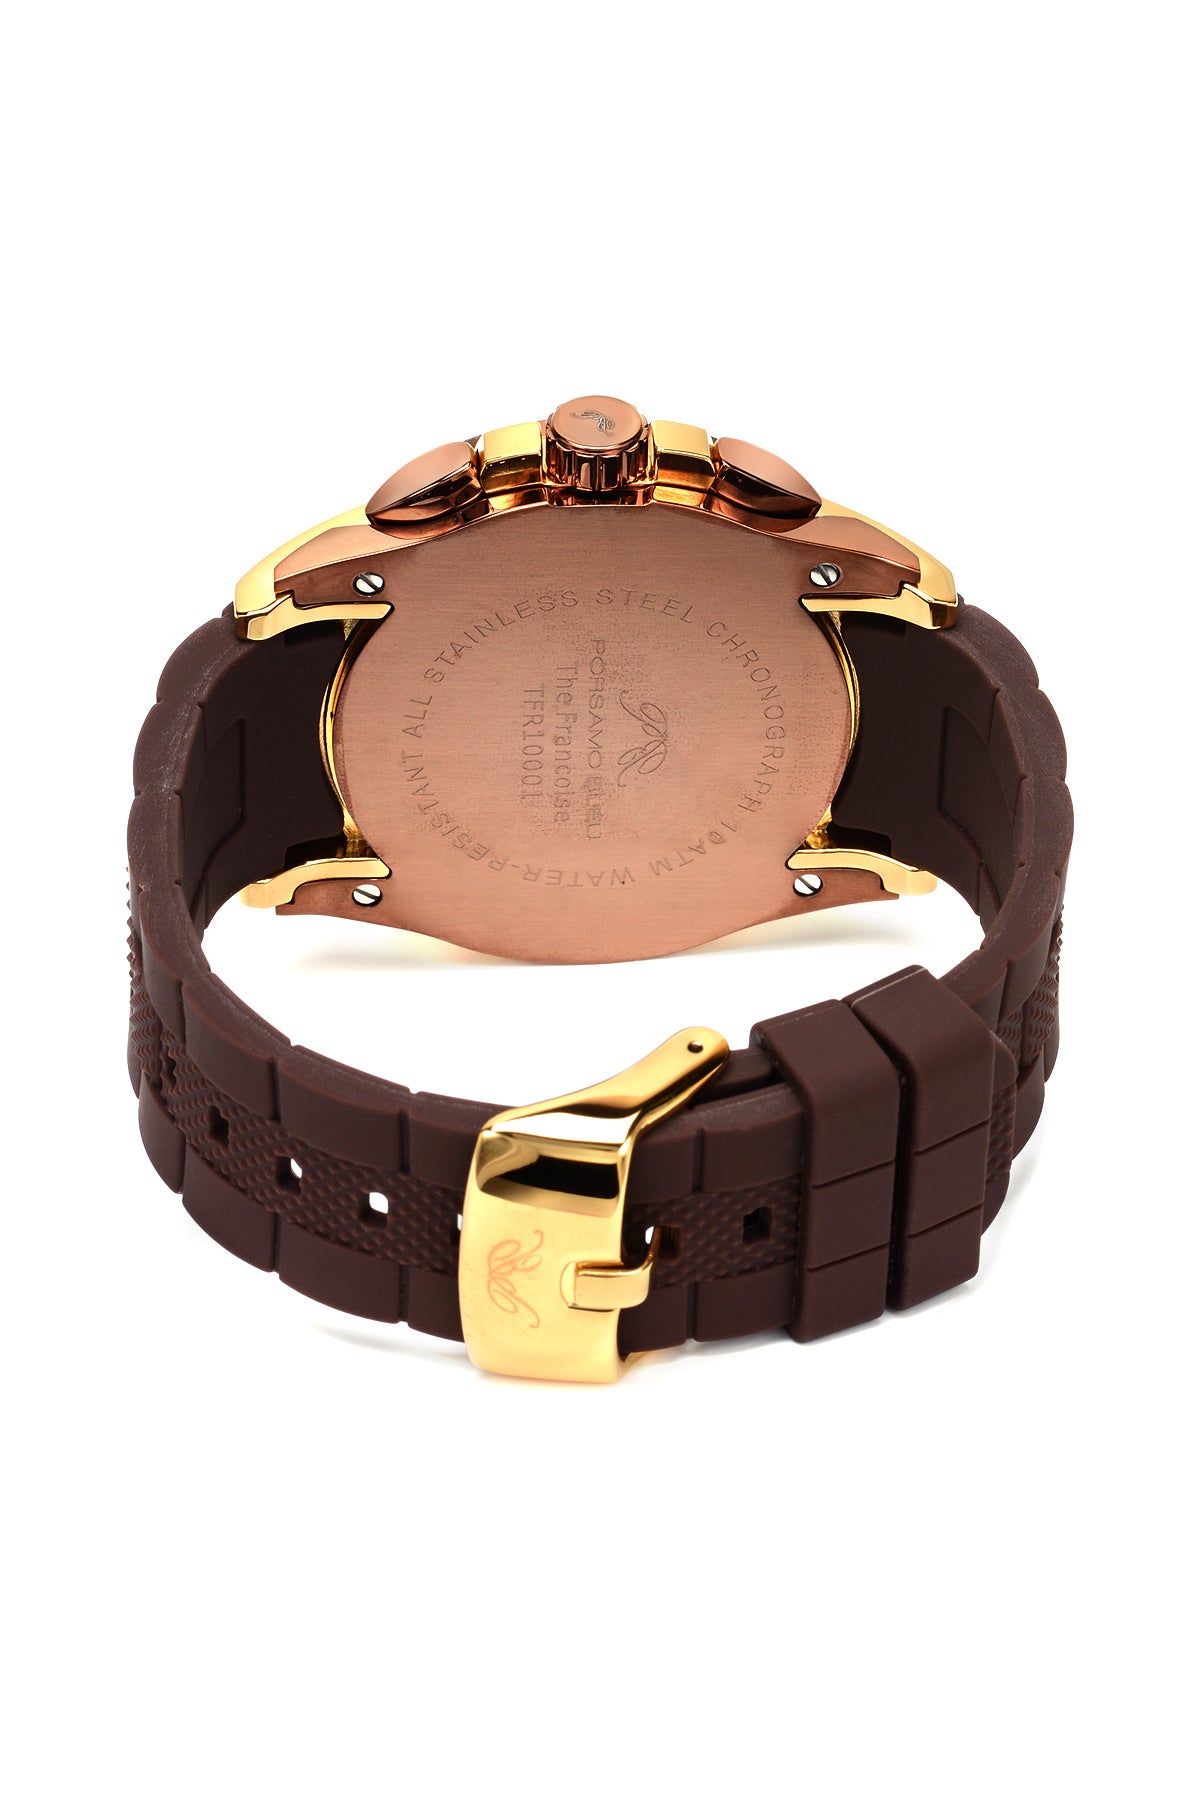 Porsamo Bleu Francoise Luxury Chronograph Men's Silicone Watch, Gold, Brown 245BFRR